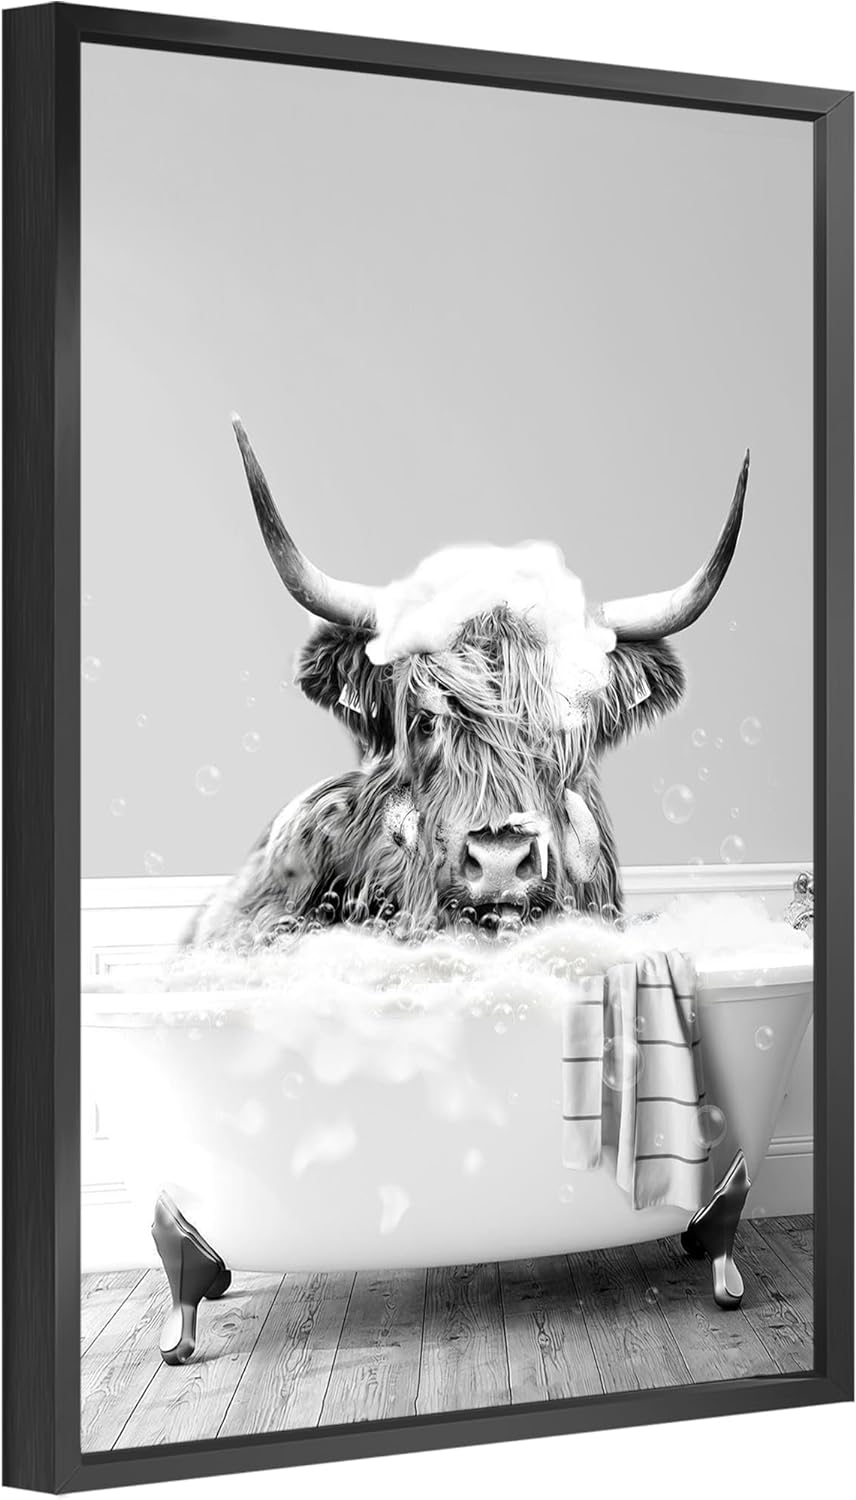 jenesaisquoi Highland Cow Bathroom Decor Wall Art, Frame Black and White Canvas Cow In Bathroom Picture, Humor Animals Bathroom Artwork Prints Ready To Hang for Bathroom, Bedroom, Kids Bathroom Decor